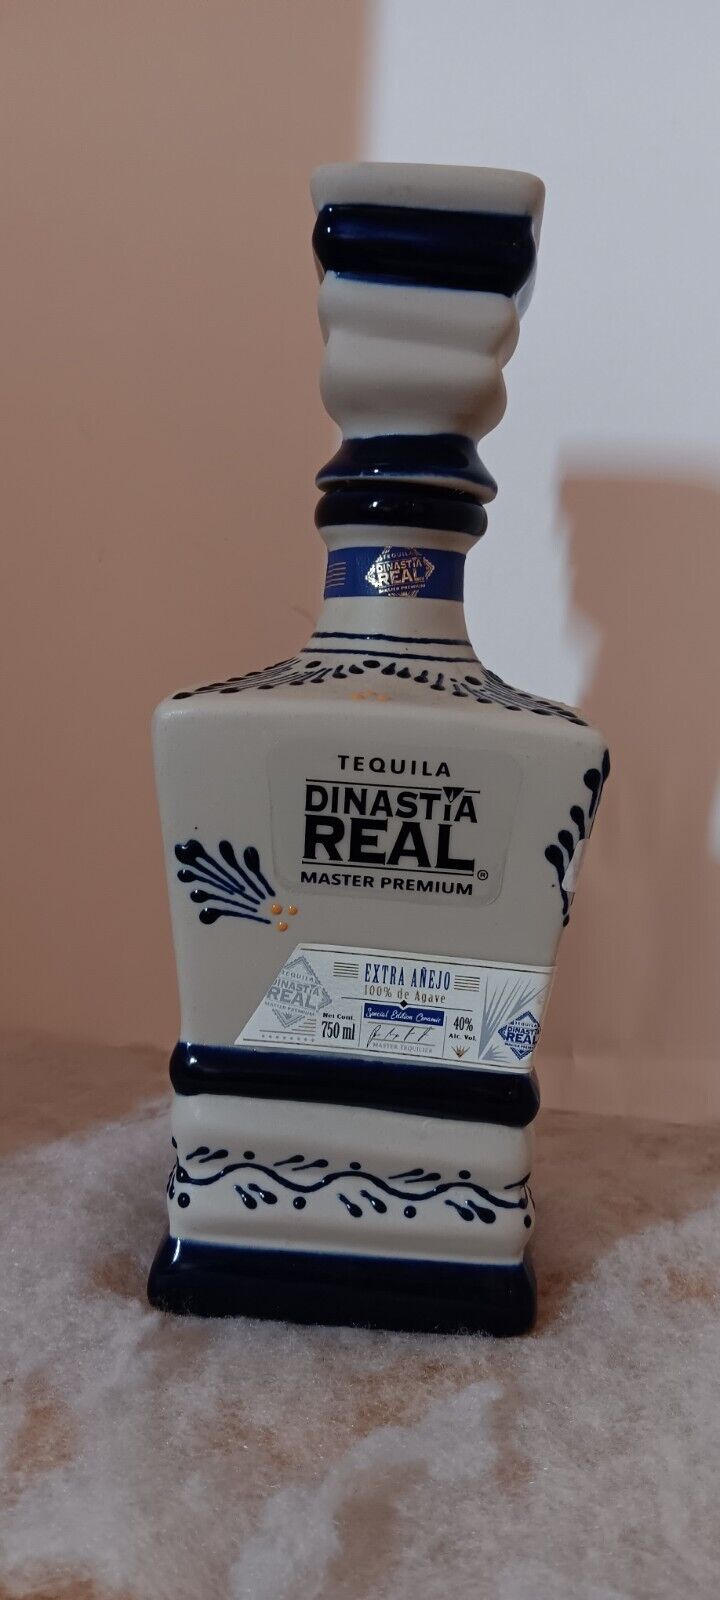 Tequila Dinastia Real Master Premium Empty Collectors Bottle